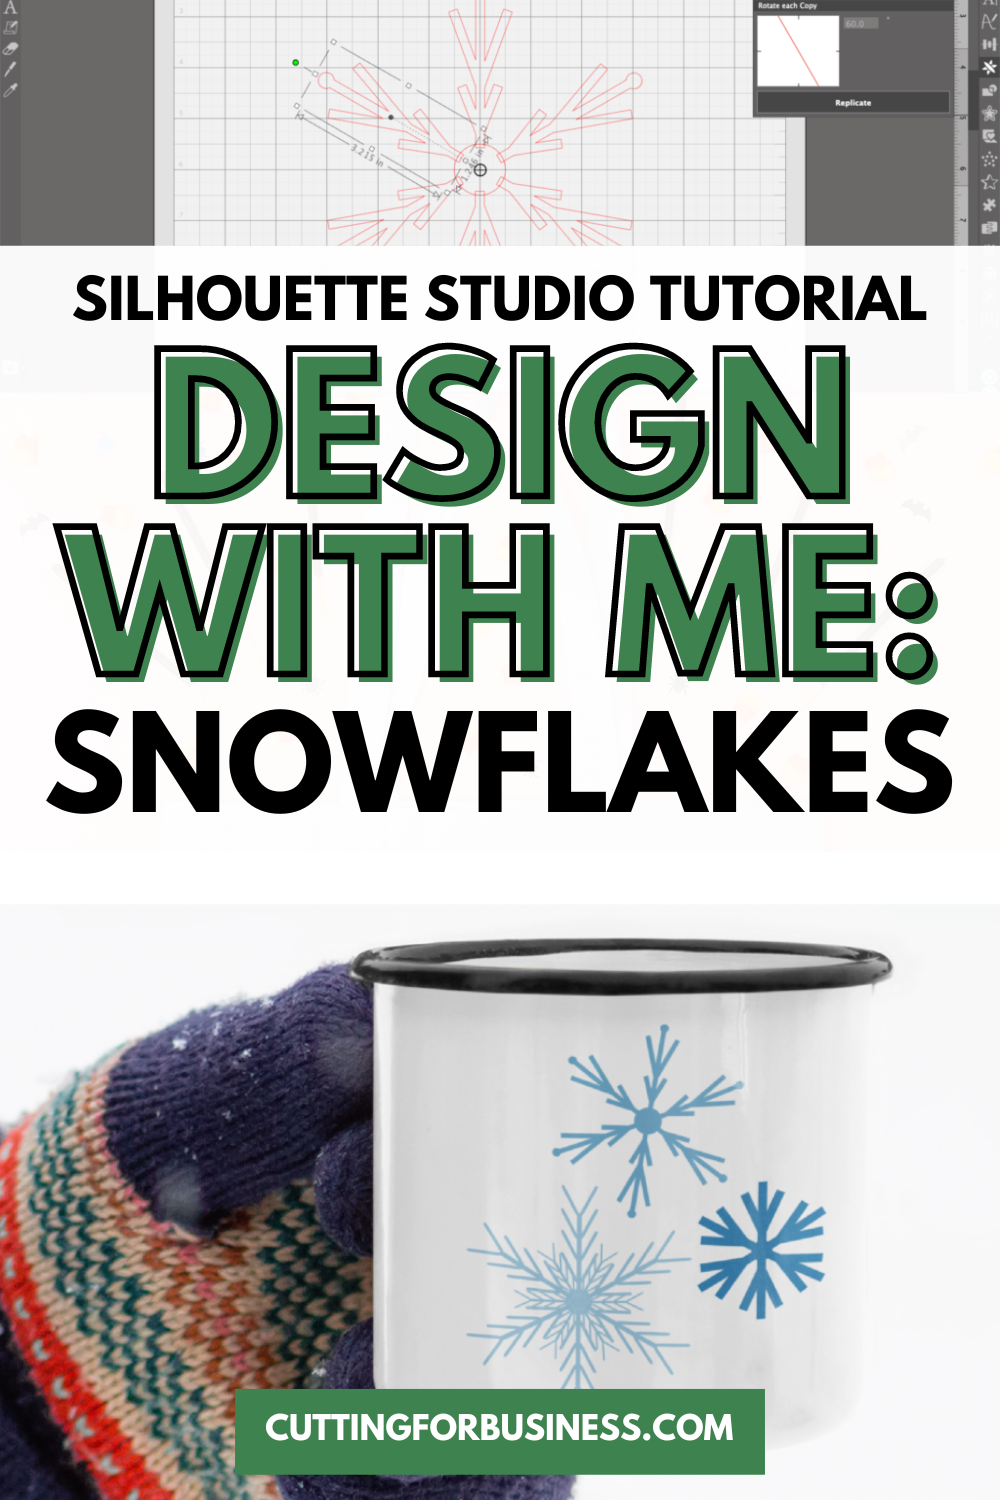 Silhouette Studio Tutorial: How to Design Snow Flakes - cuttingforbusiness.com.